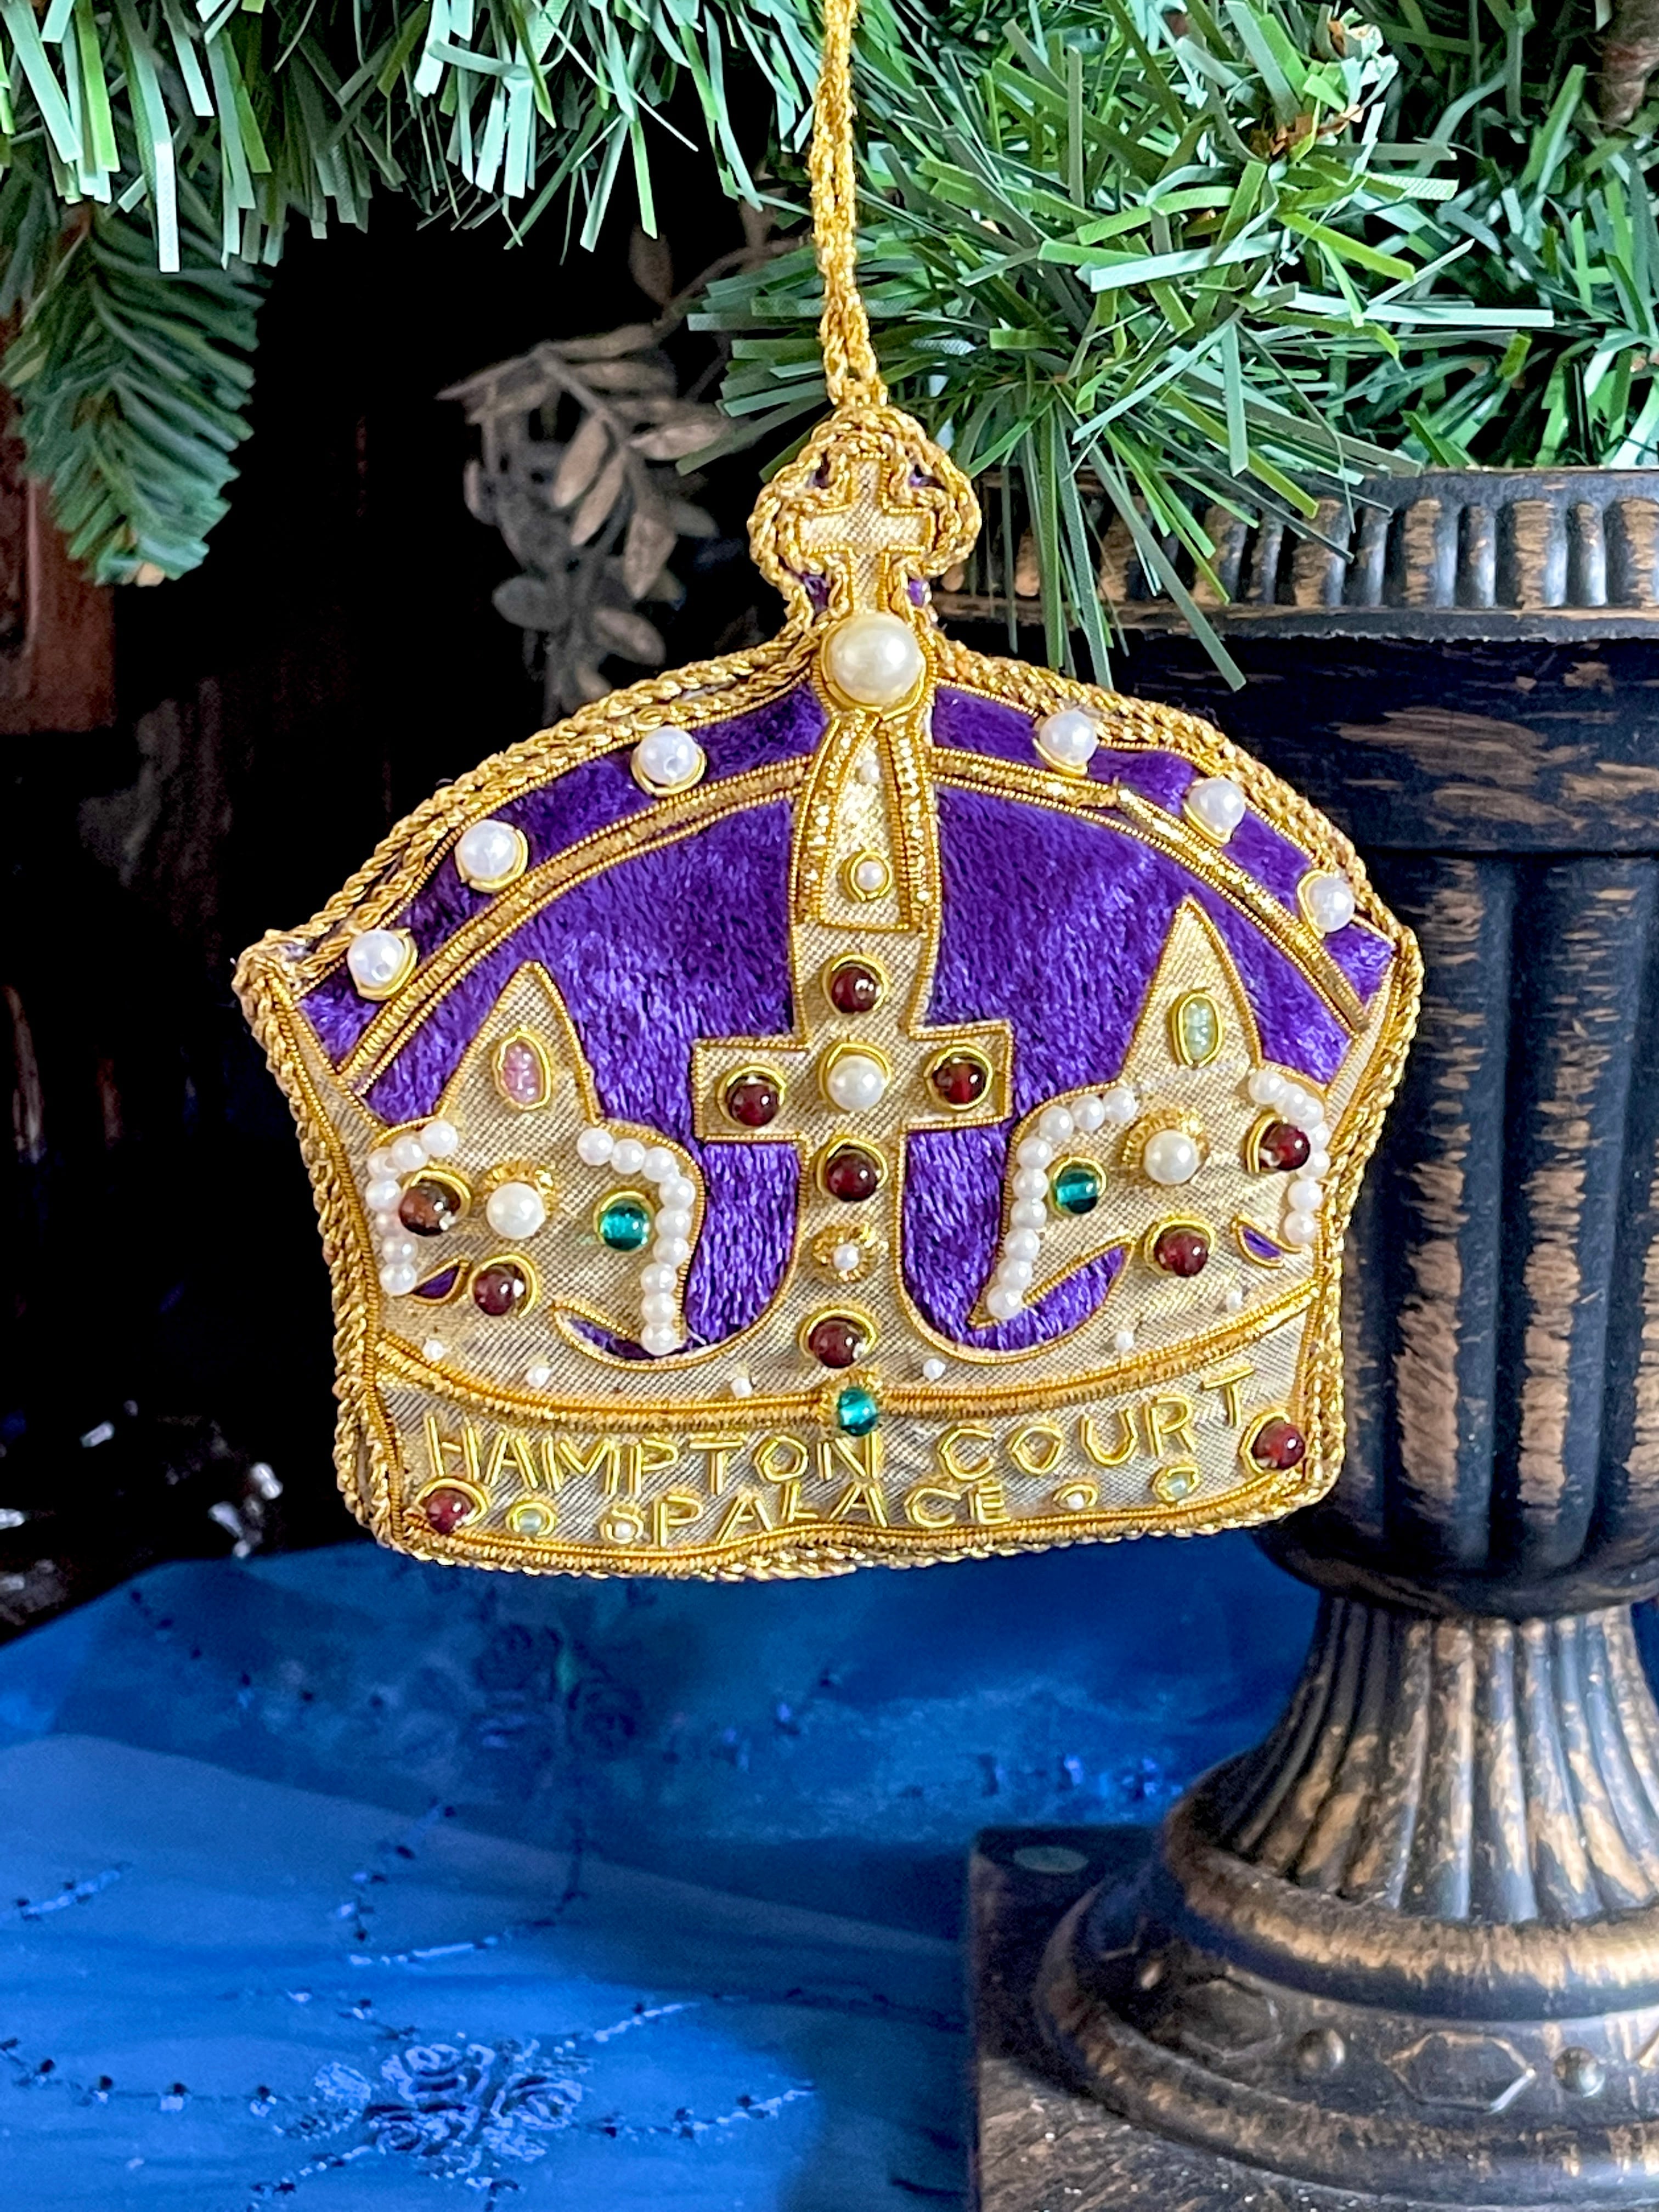 40%OFF!『Royal Palace』ハンプトン コート宮殿の王冠 オーナメント Hampton Court Palace crown  decoration｜Merry Unbirthday